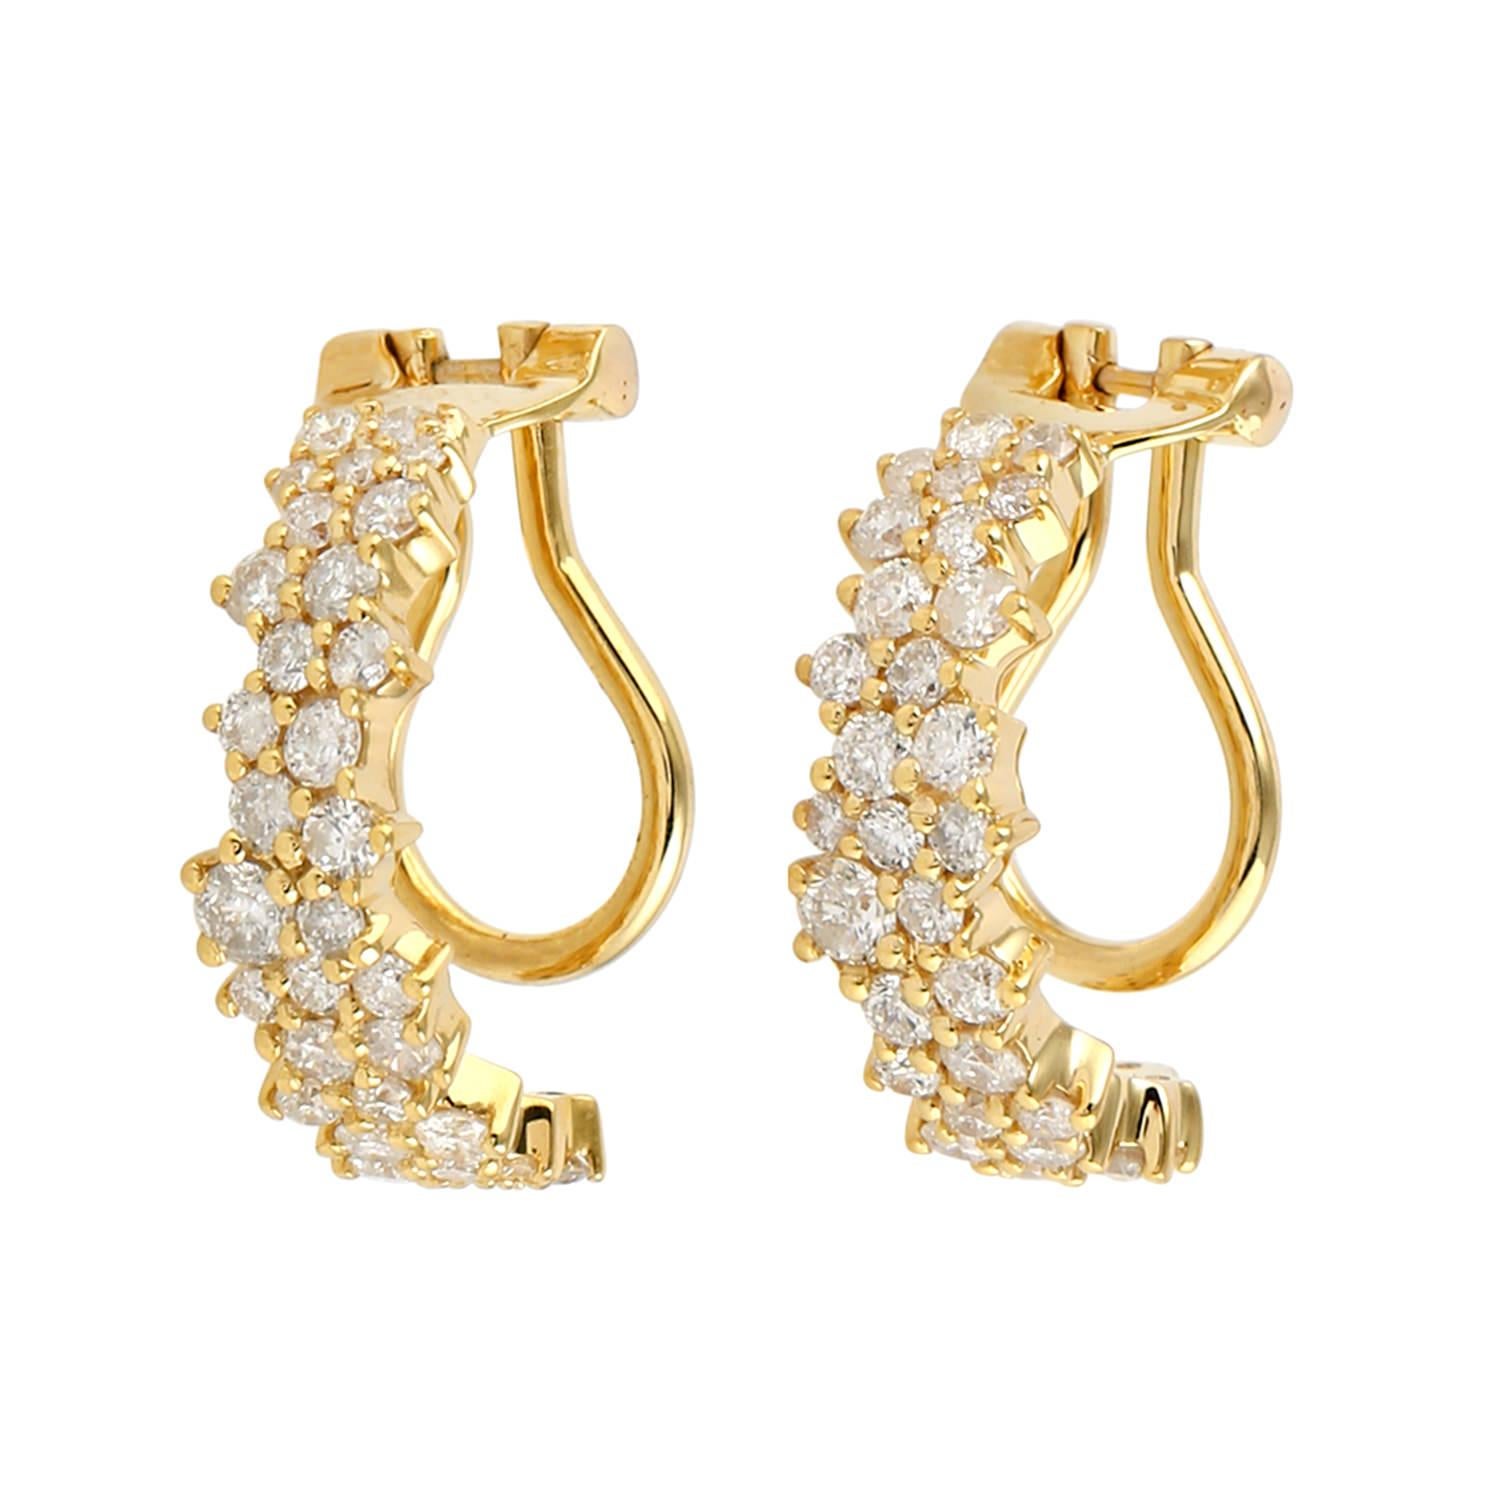 Mixed Cut 1.28 Carats Diamond 14 Karat Gold Cluster Earrings For Sale